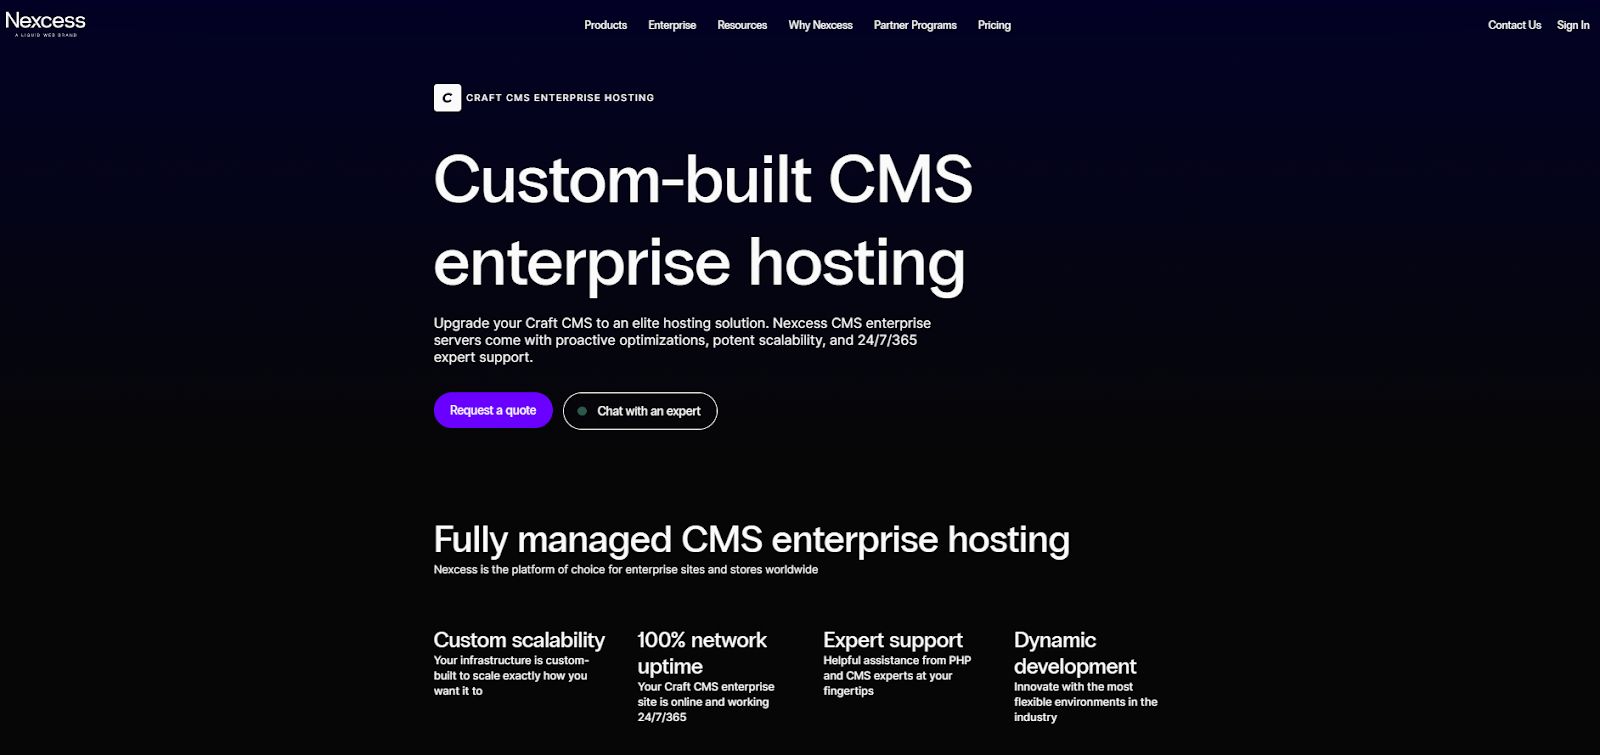 Craft CMS enterprise hosting from Nexcess.